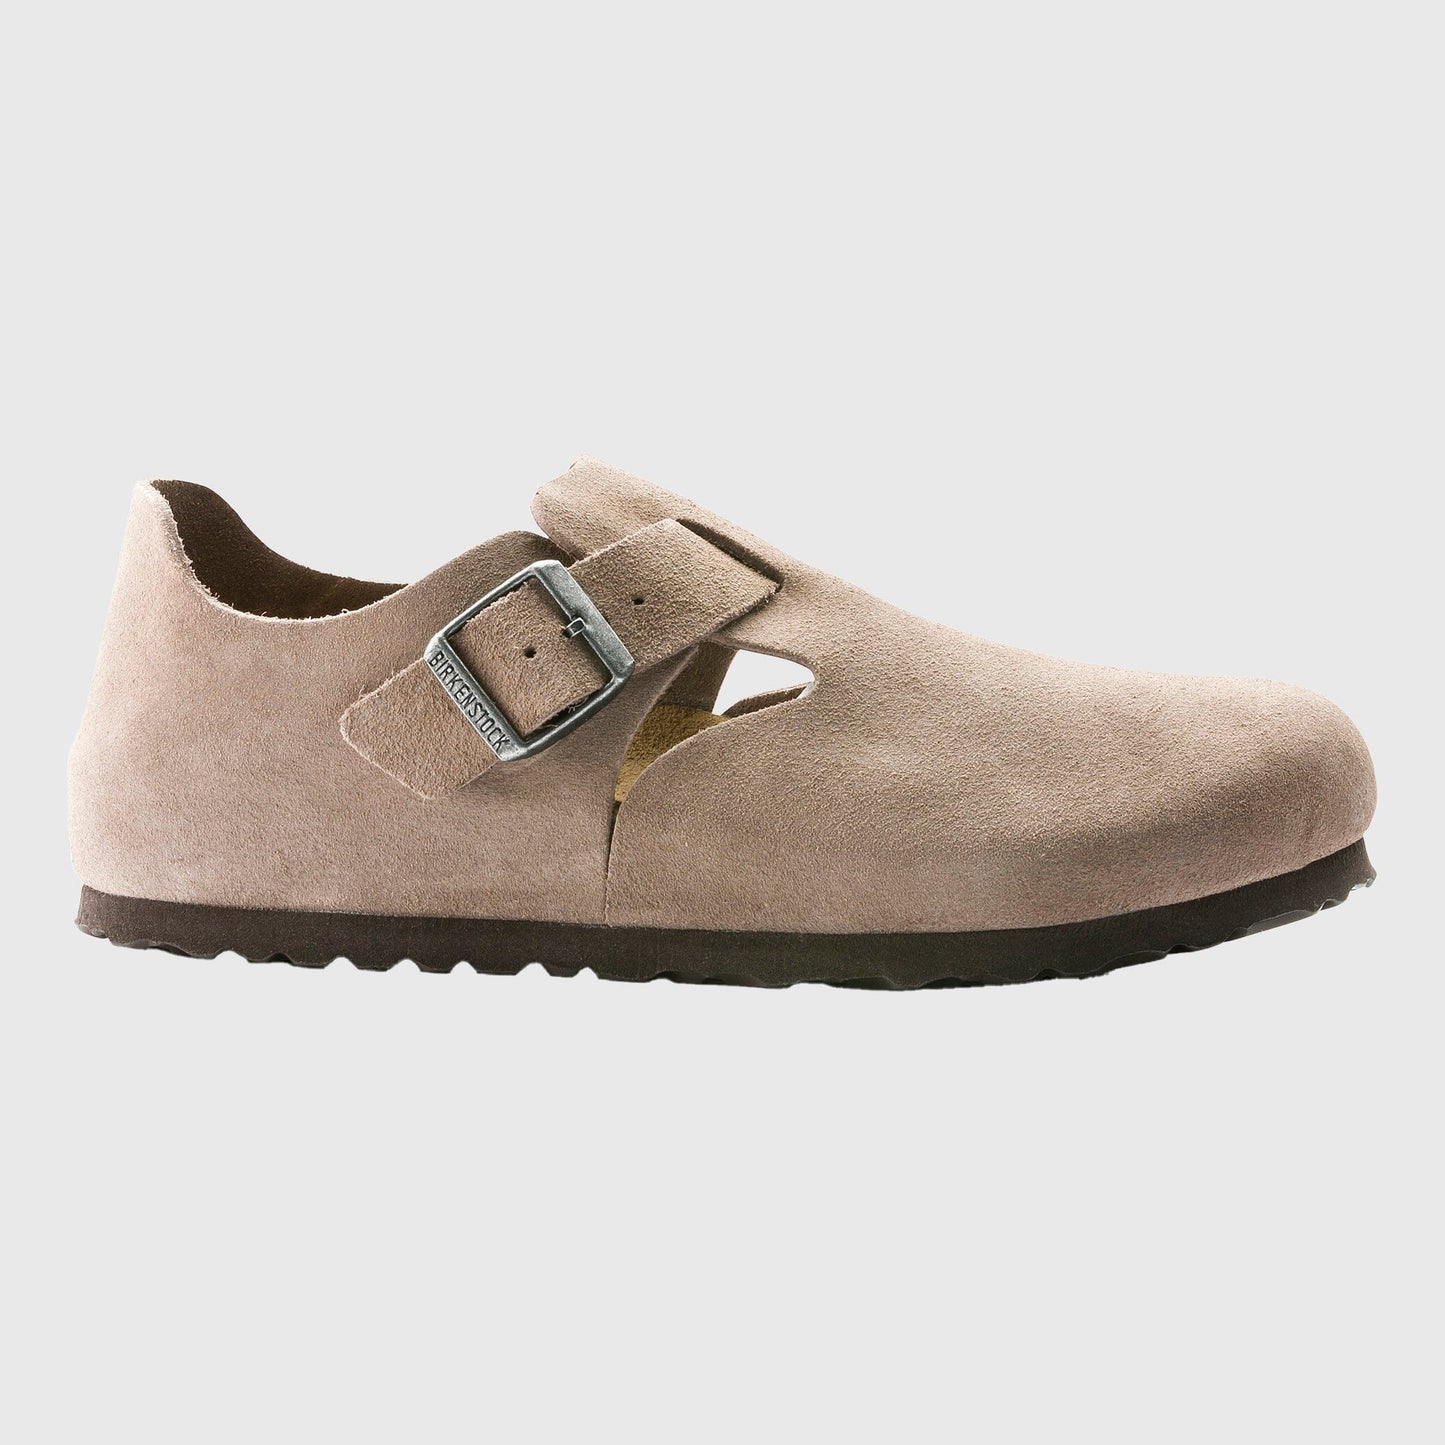 Birkenstock London Shoe Suede - Taupe Shoes Birkenstock 